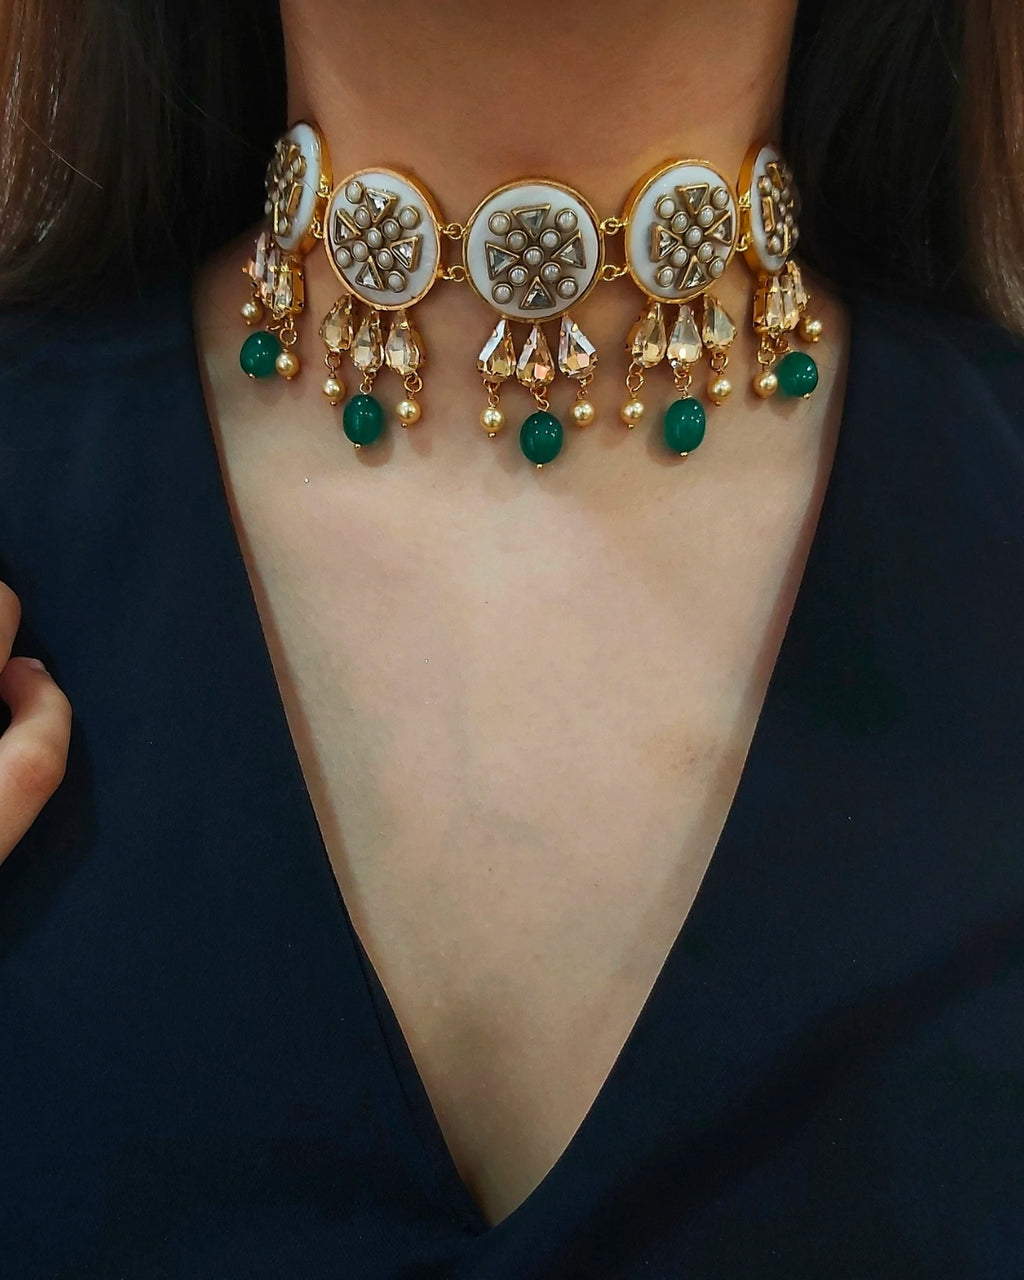 Ruheen Choker in Emerald - Necklaces - Handcrafted Jewellery - Made in India - Dubai Jewellery, Fashion & Lifestyle - Dori